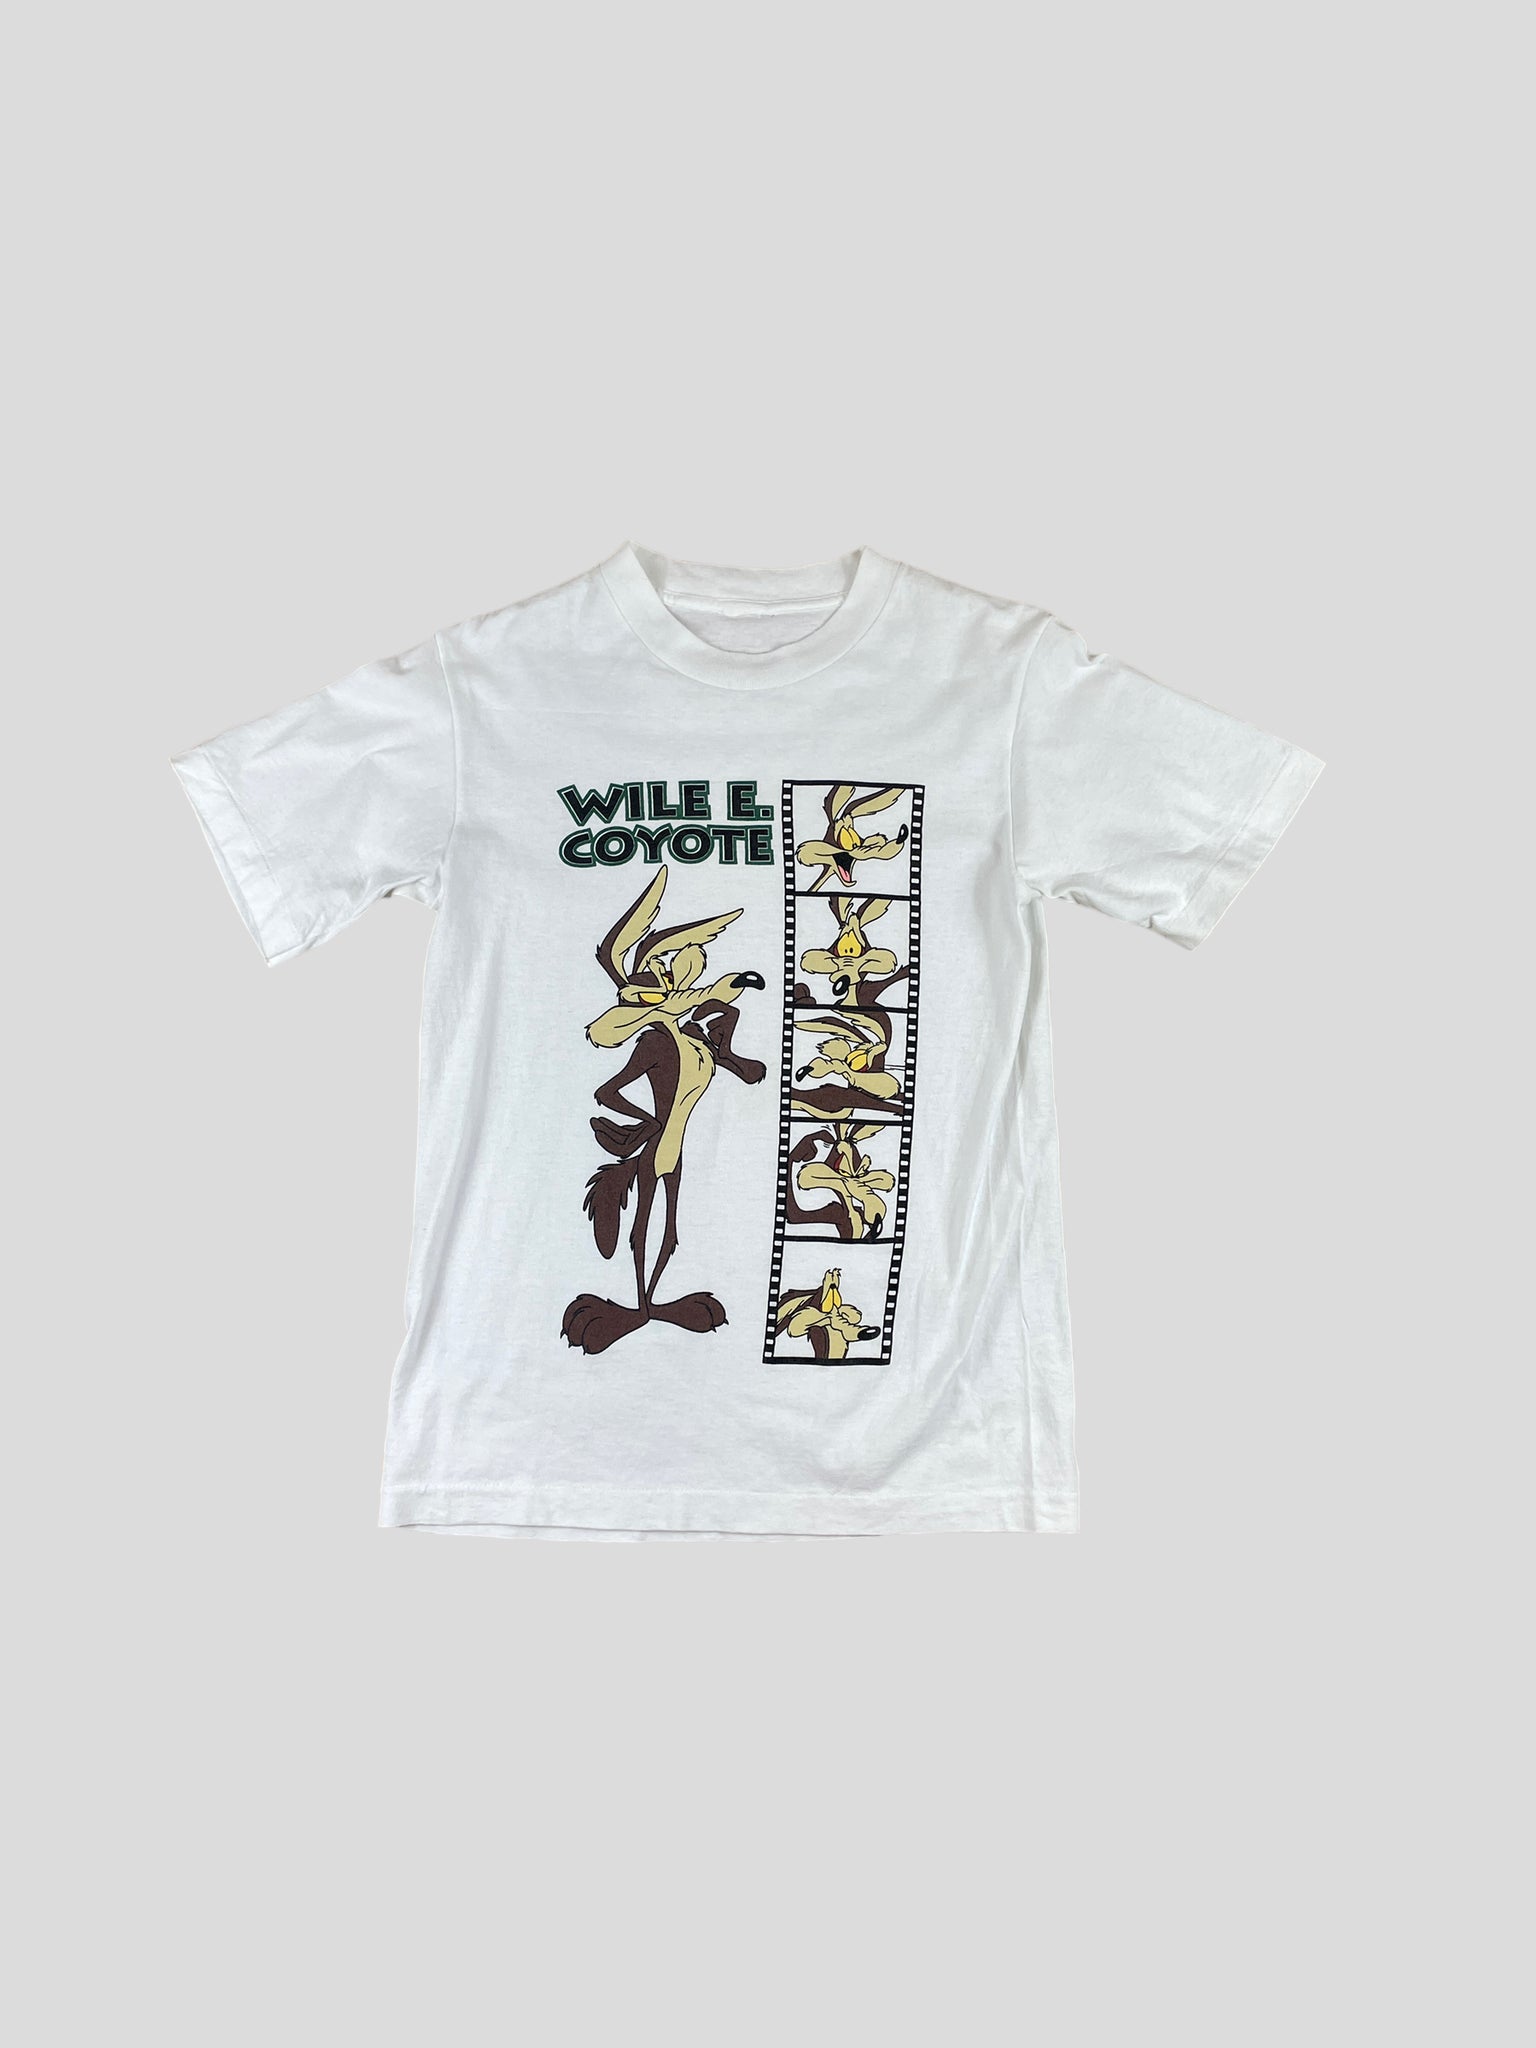 Wile E Coyote t-shirt